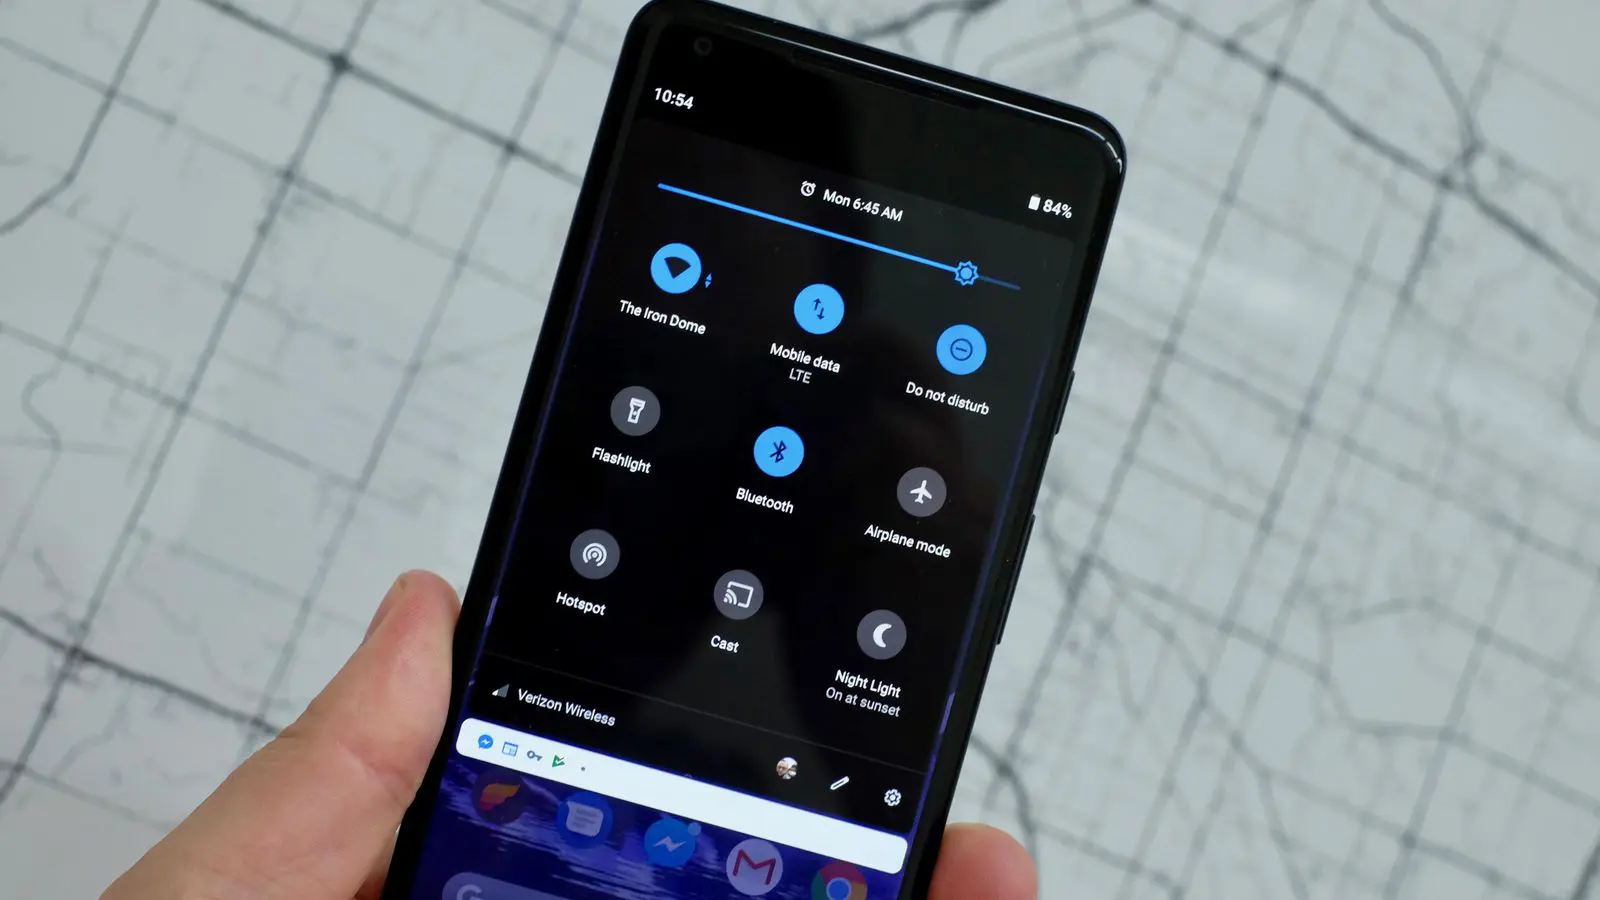 Android Q dark mode